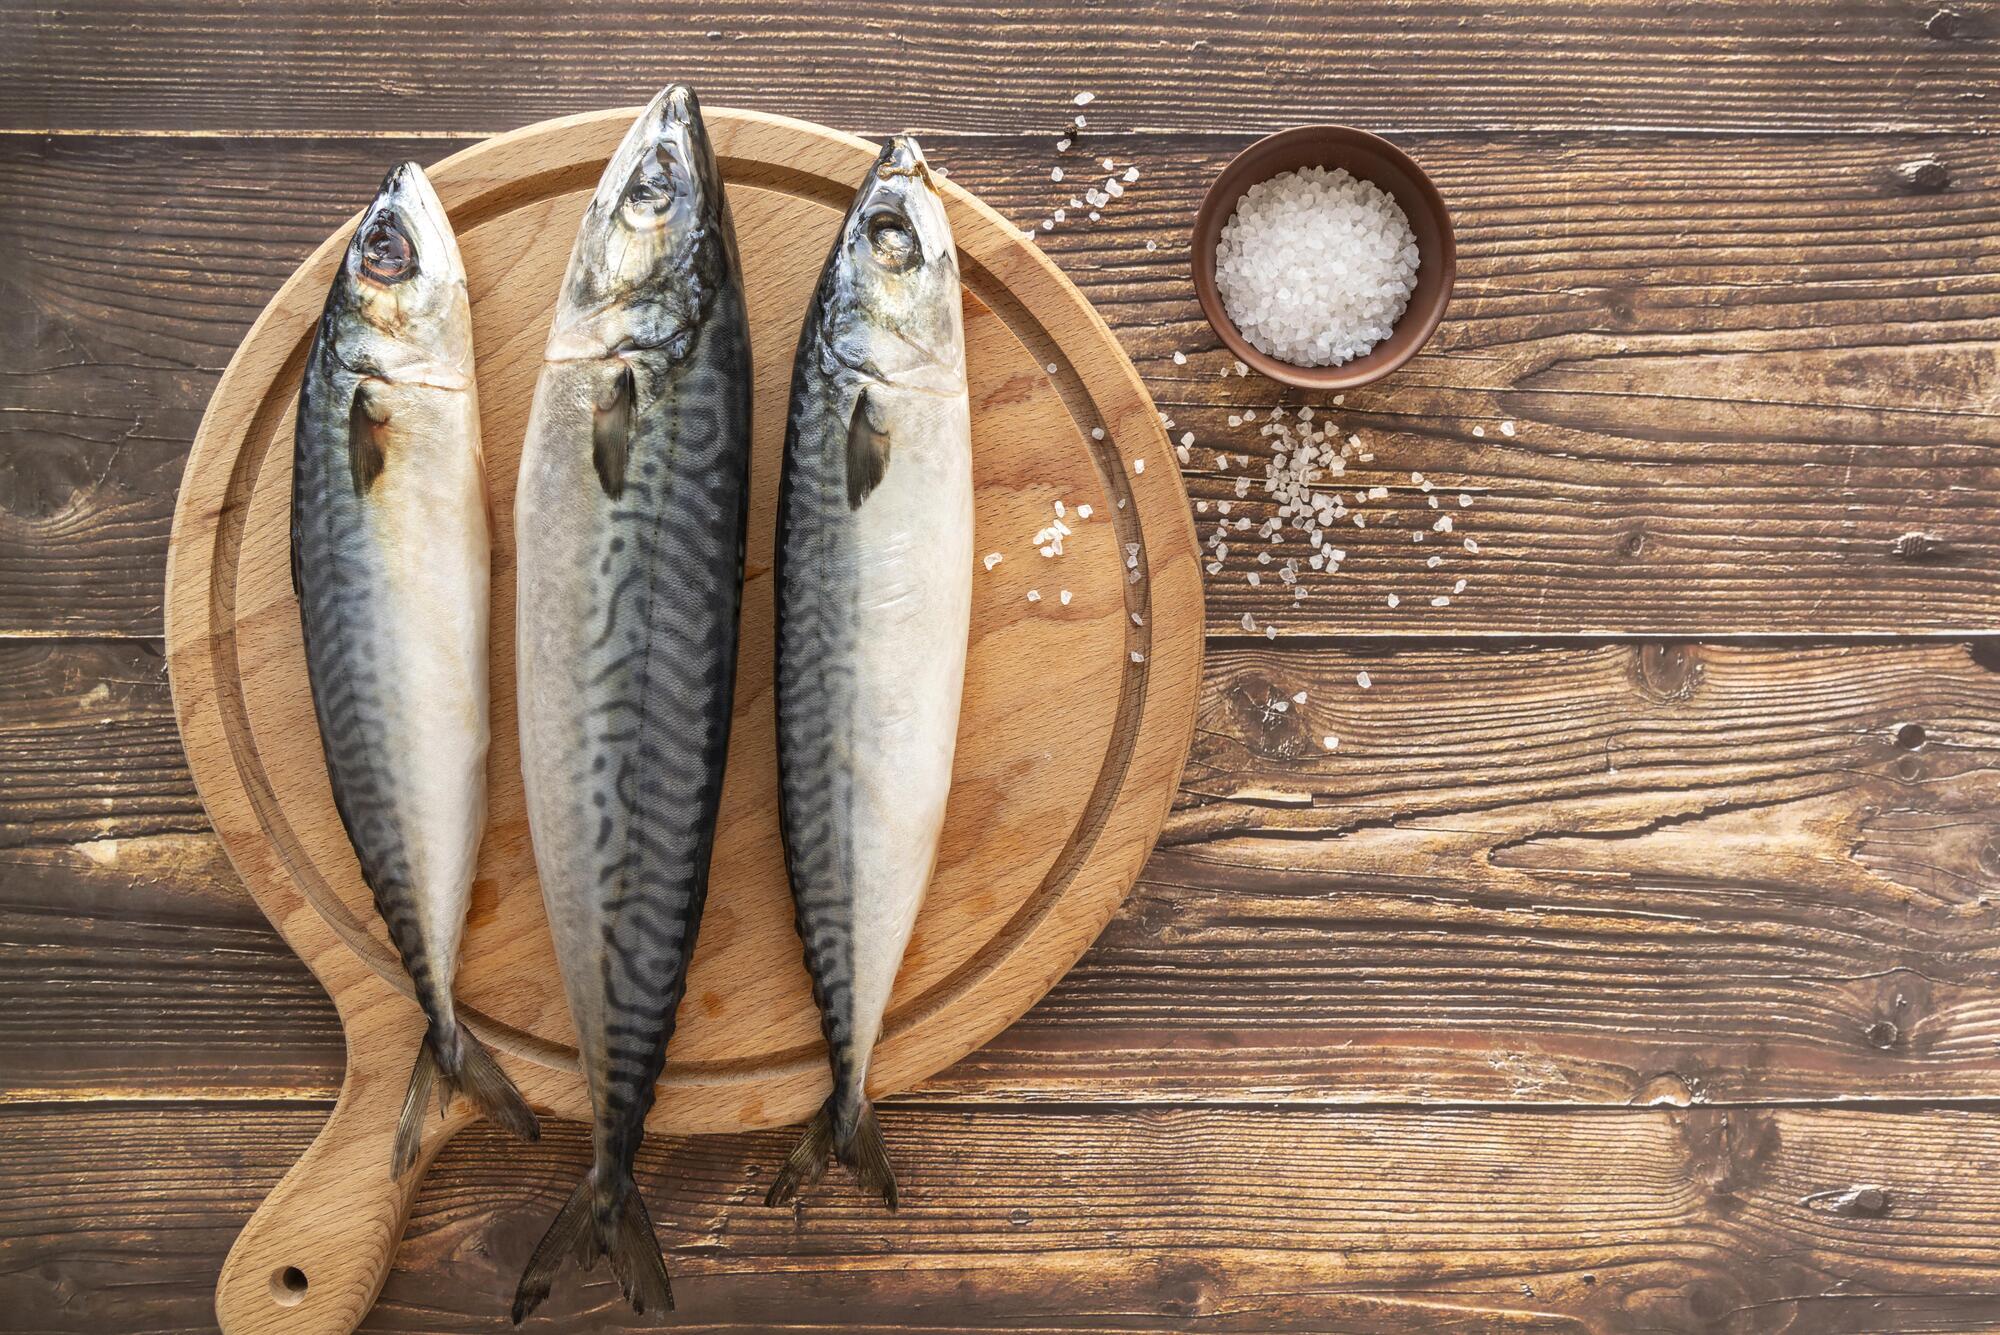 How to clean mackerel easily: useful life hacks